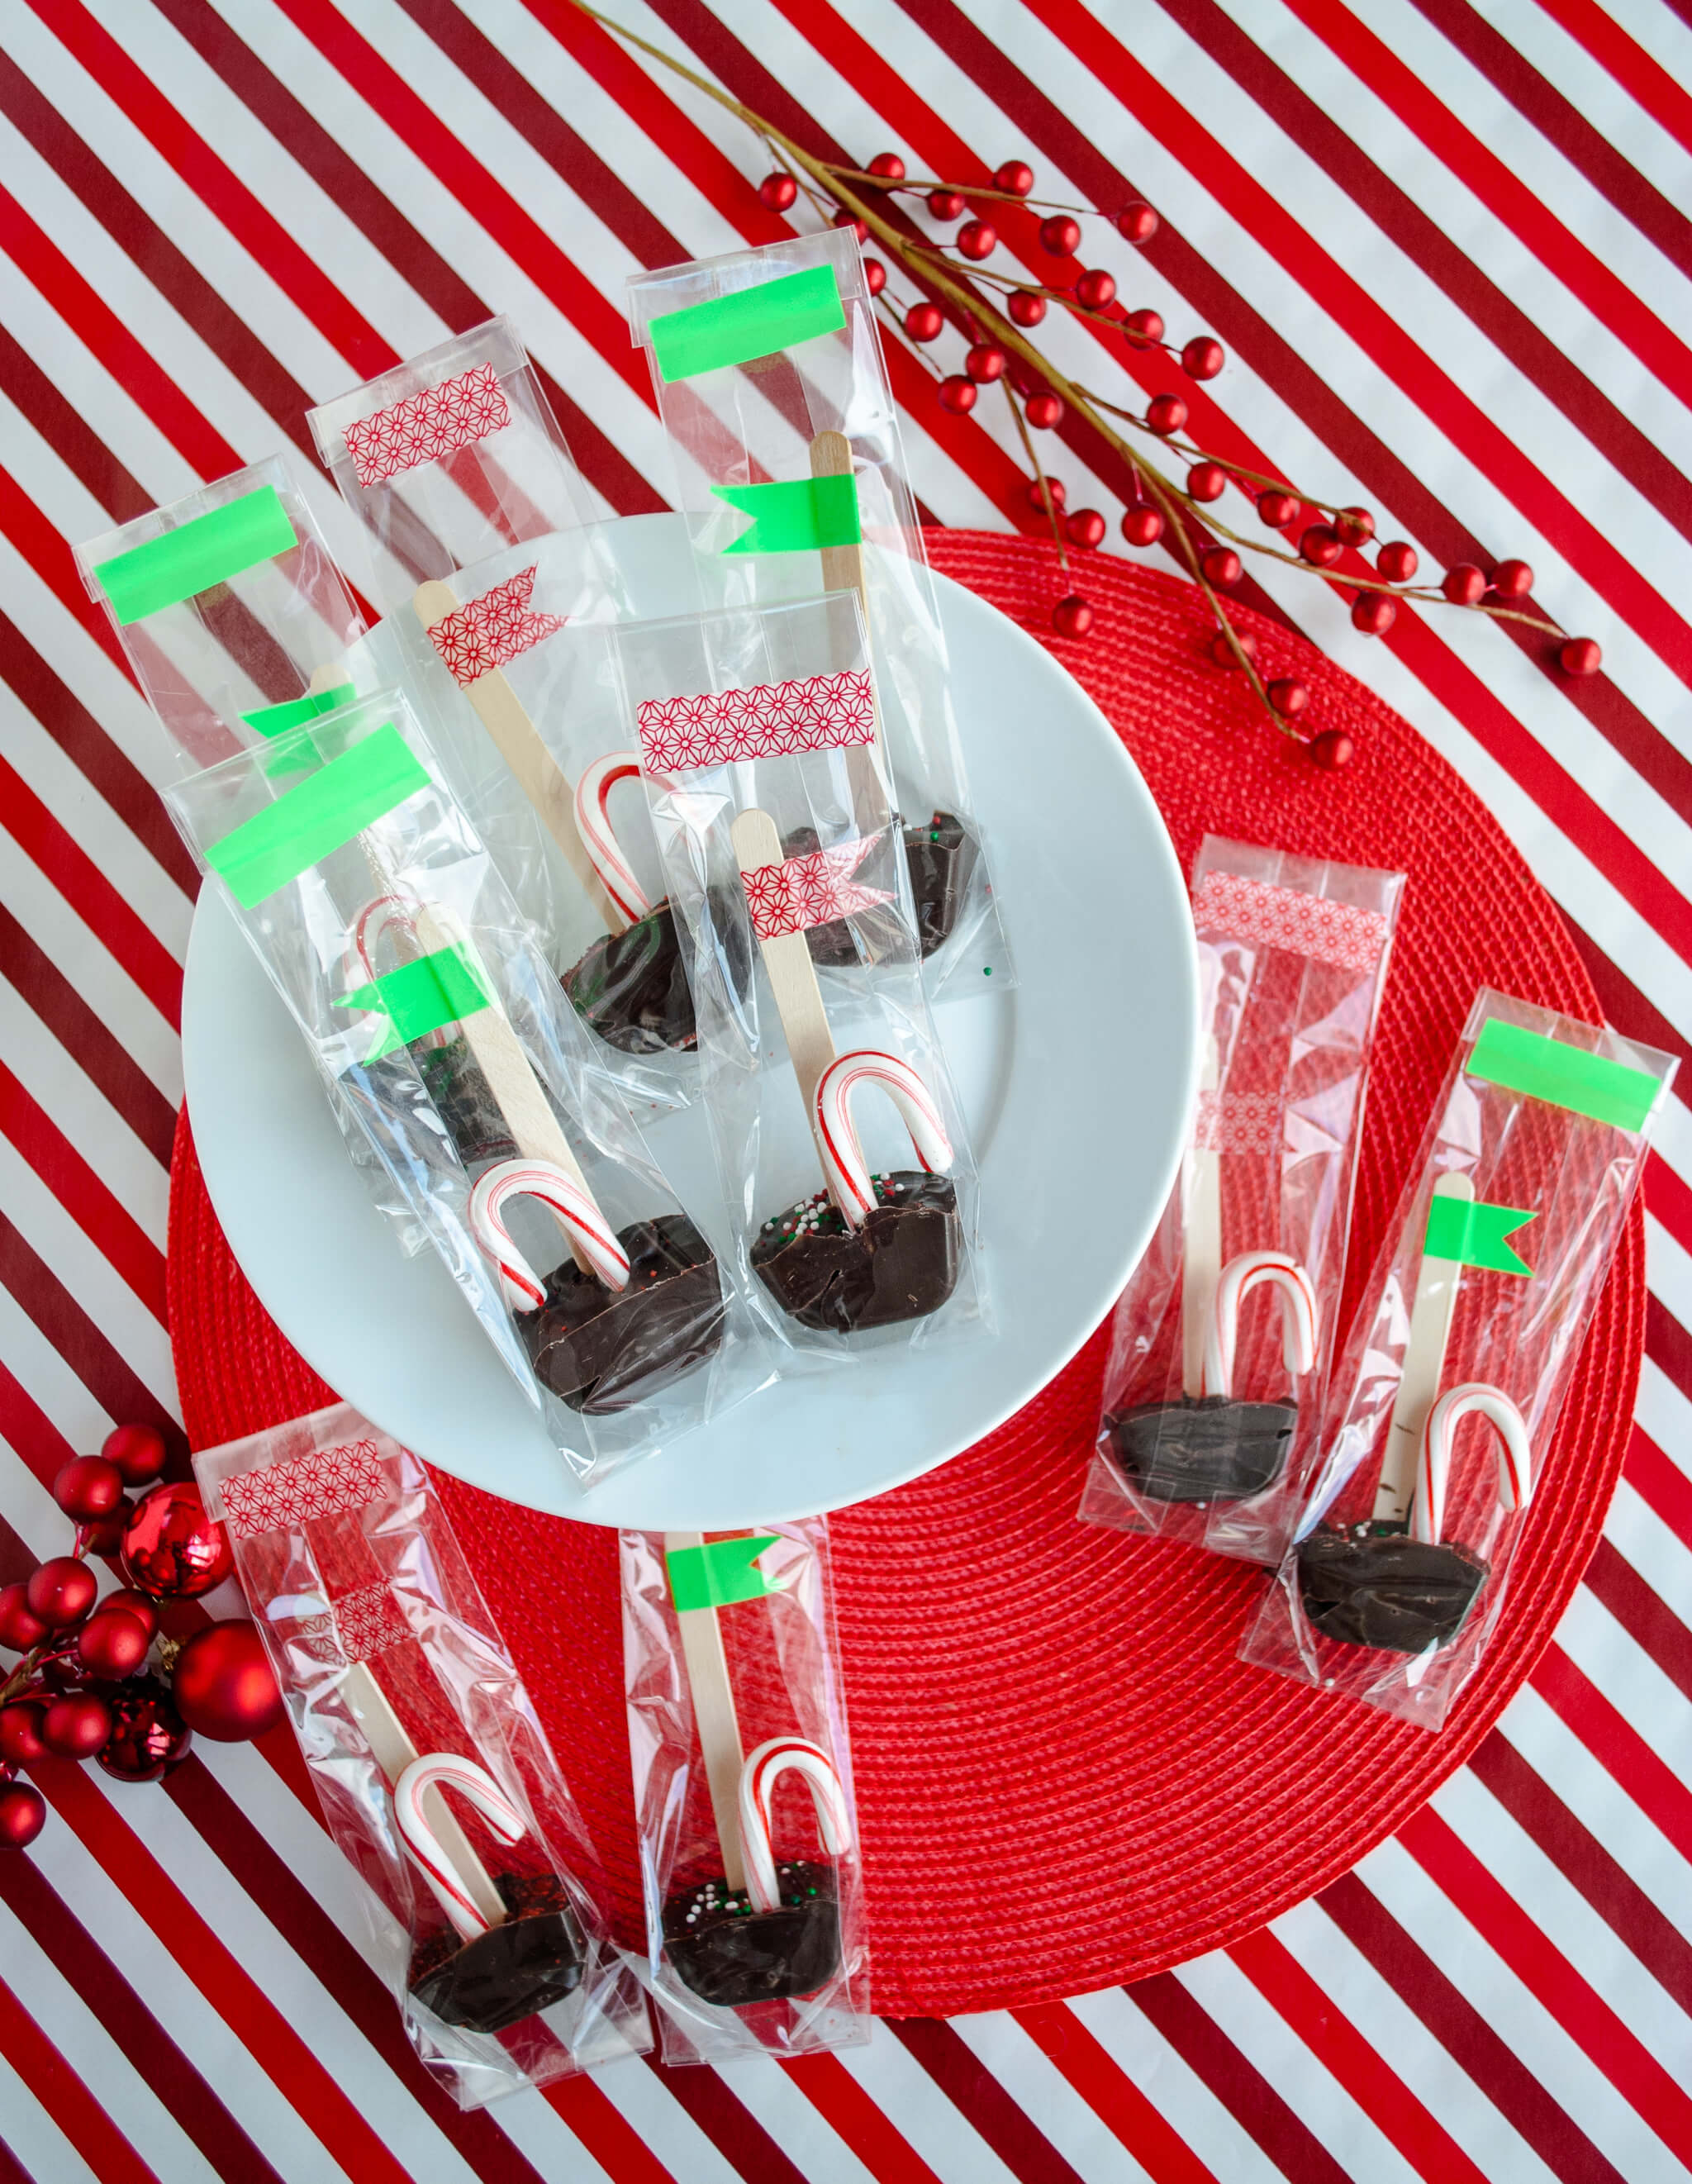 Handmade Chocolate Stir Sticks for Hot Chocolate and Coffee. Make this easy DIY Christmas gift for teachers and neighbors.